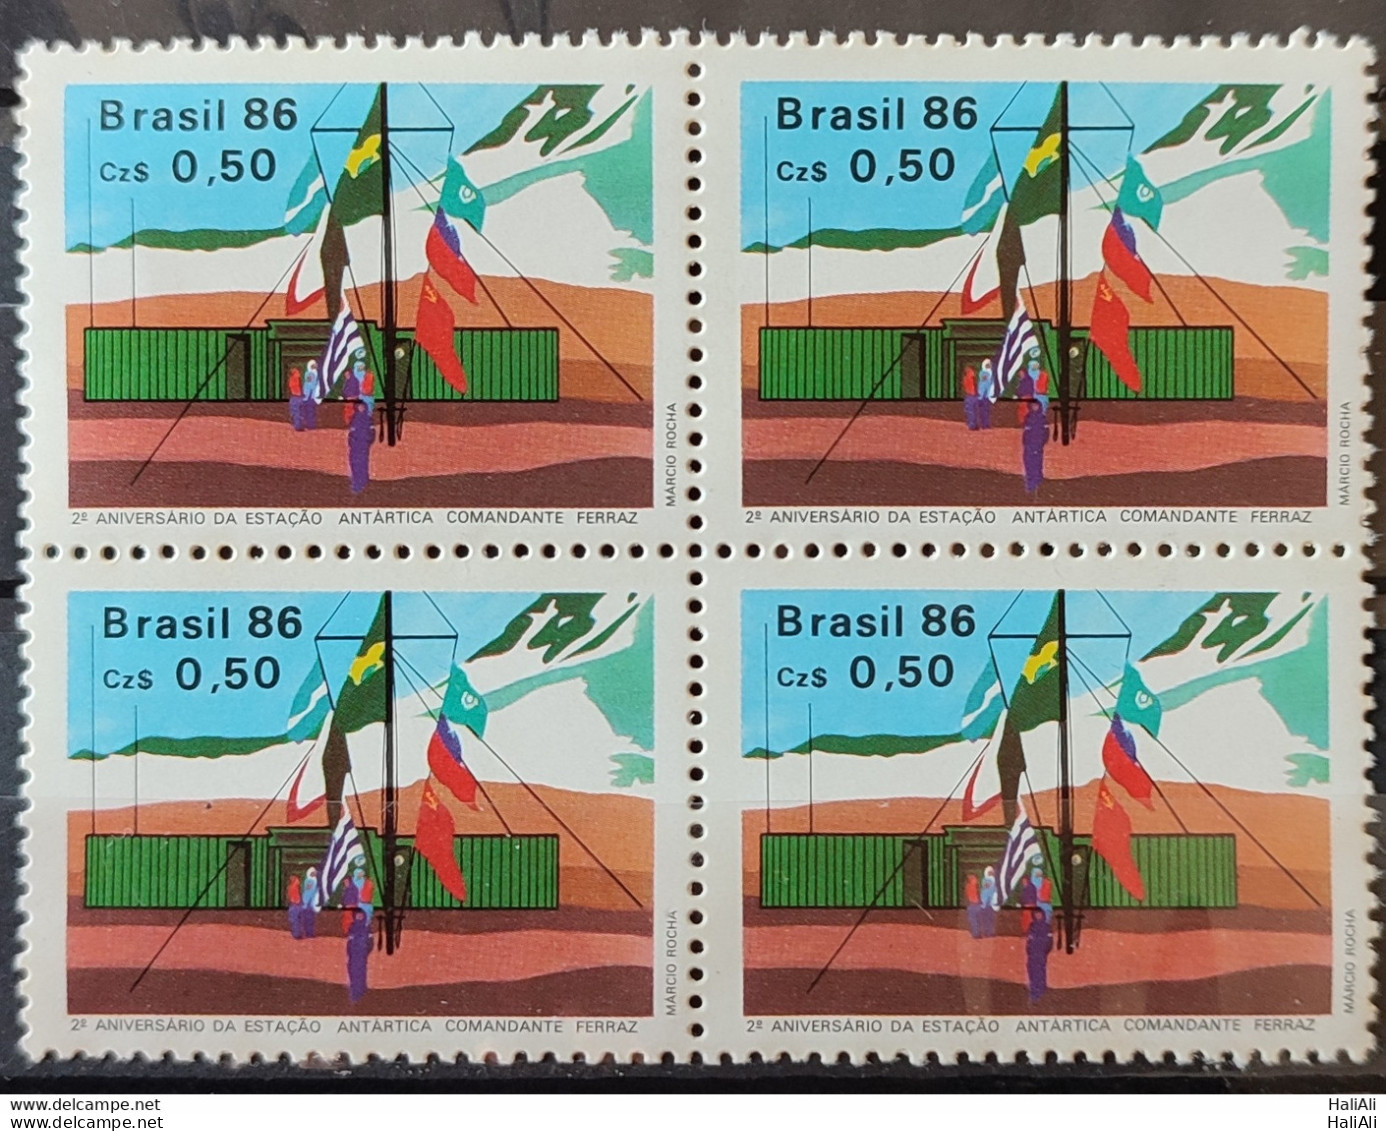 C 1508 Brazil Stamp Antarctic Station Commander Ferraz Flag 1986 Block Of 4 2.jpg - Ungebraucht